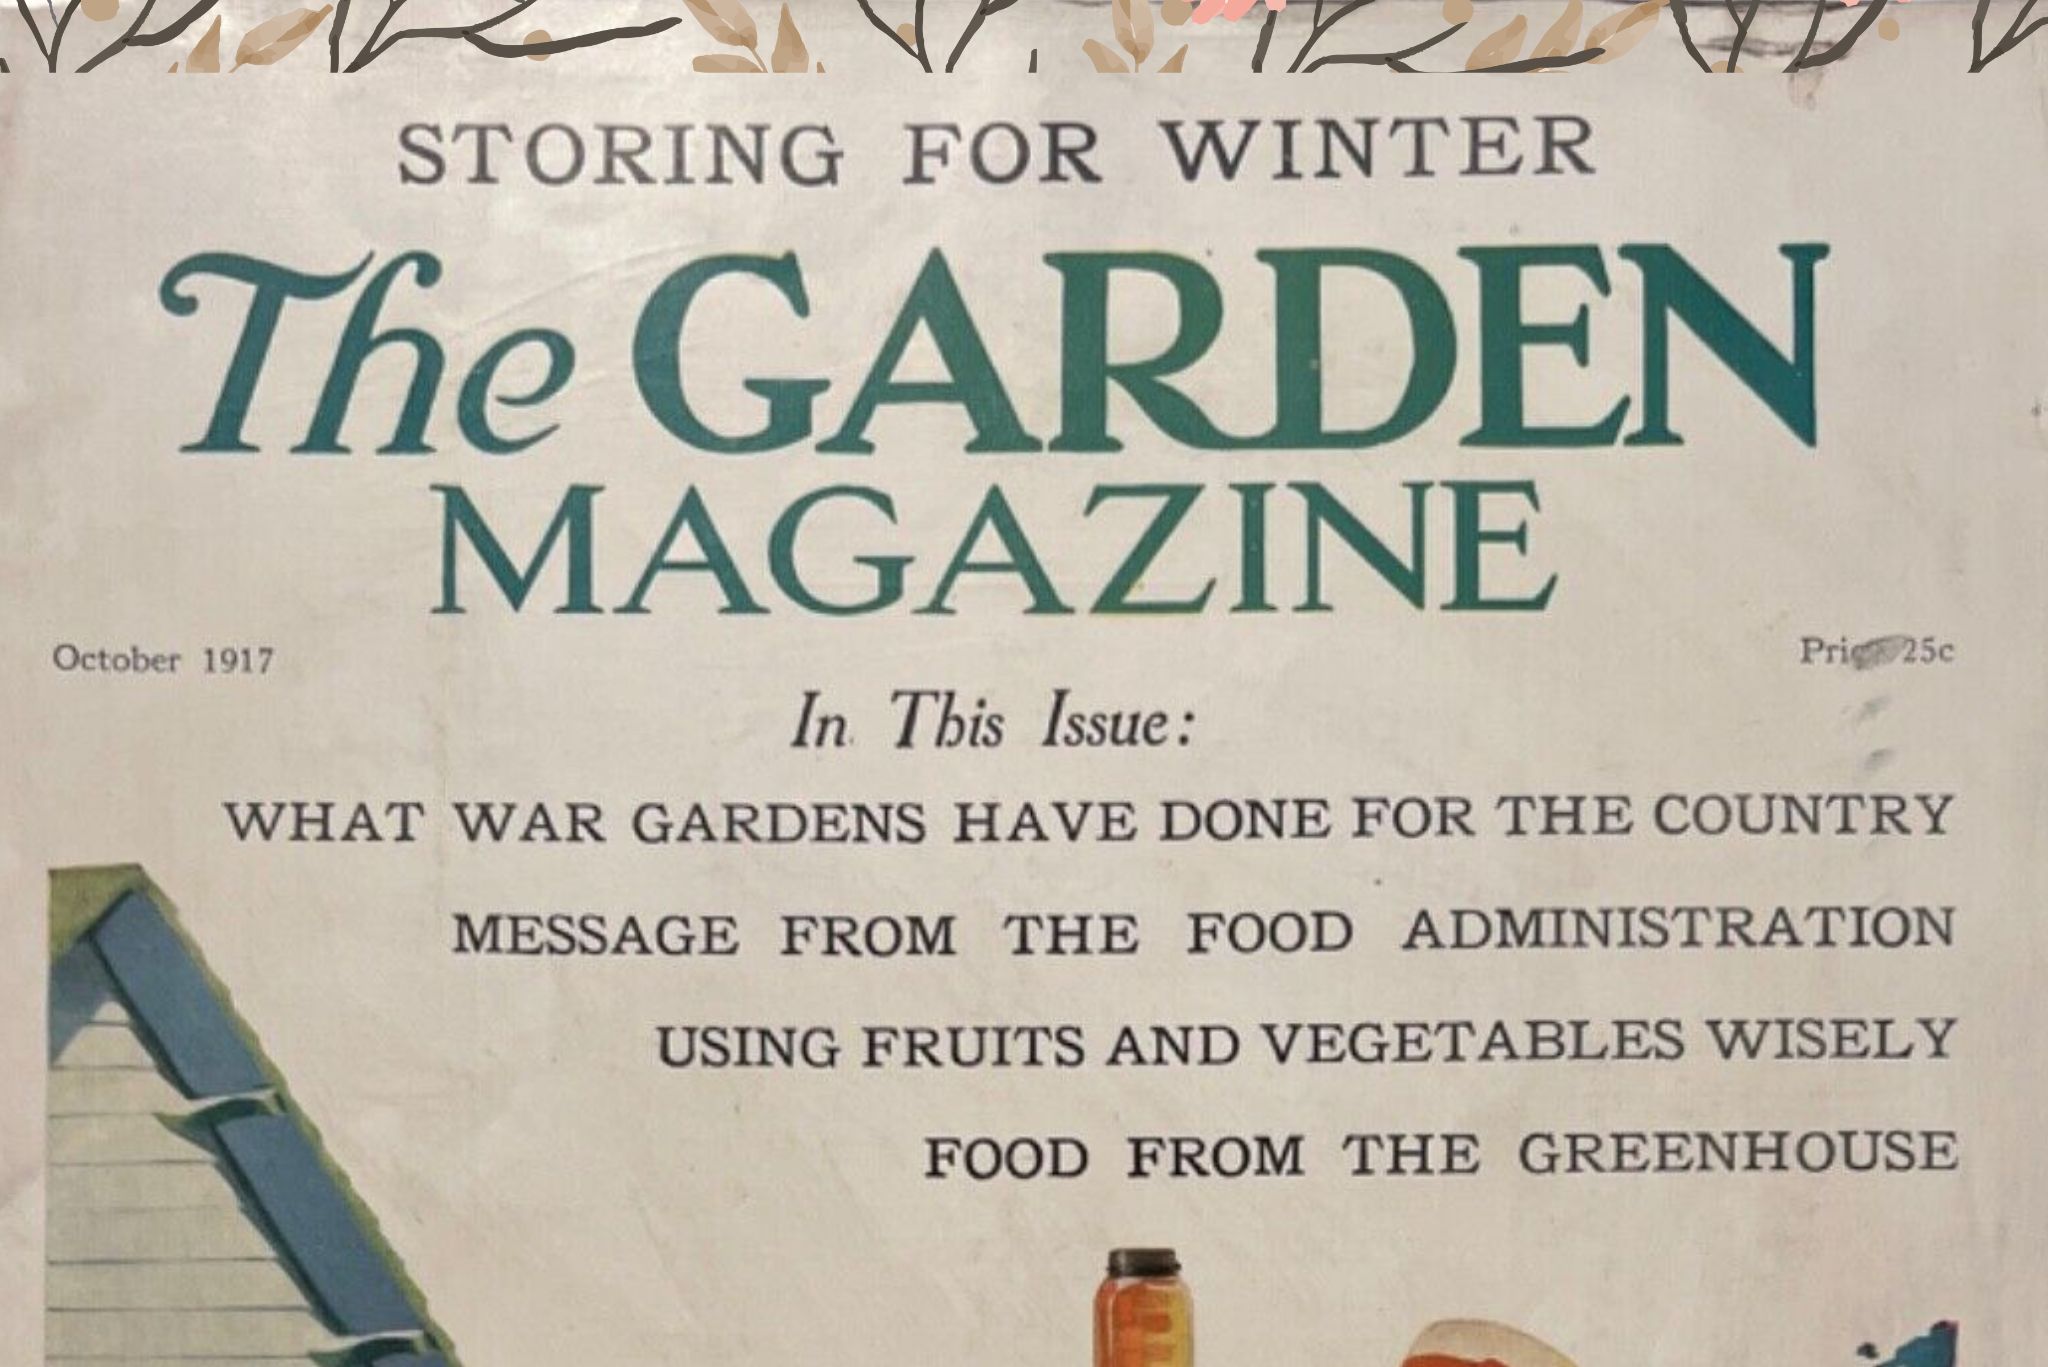 The classic garden magazine of the 20th century